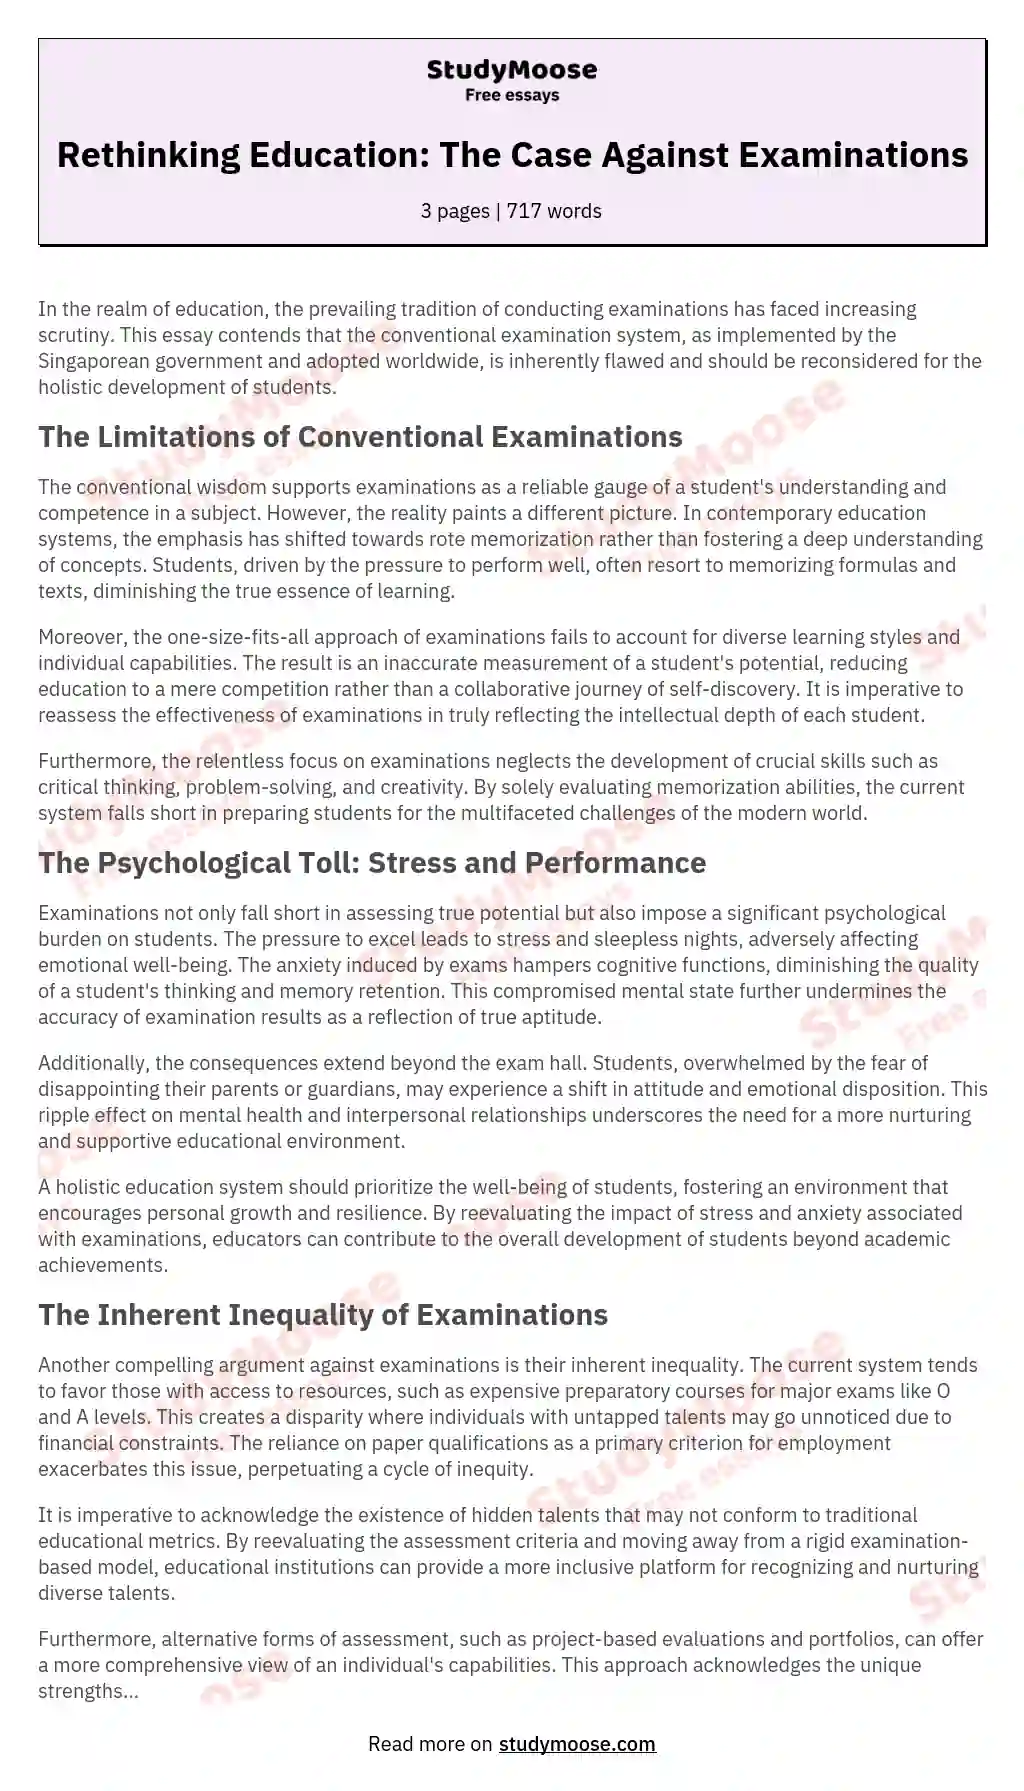 Rethinking Education: The Case Against Examinations essay